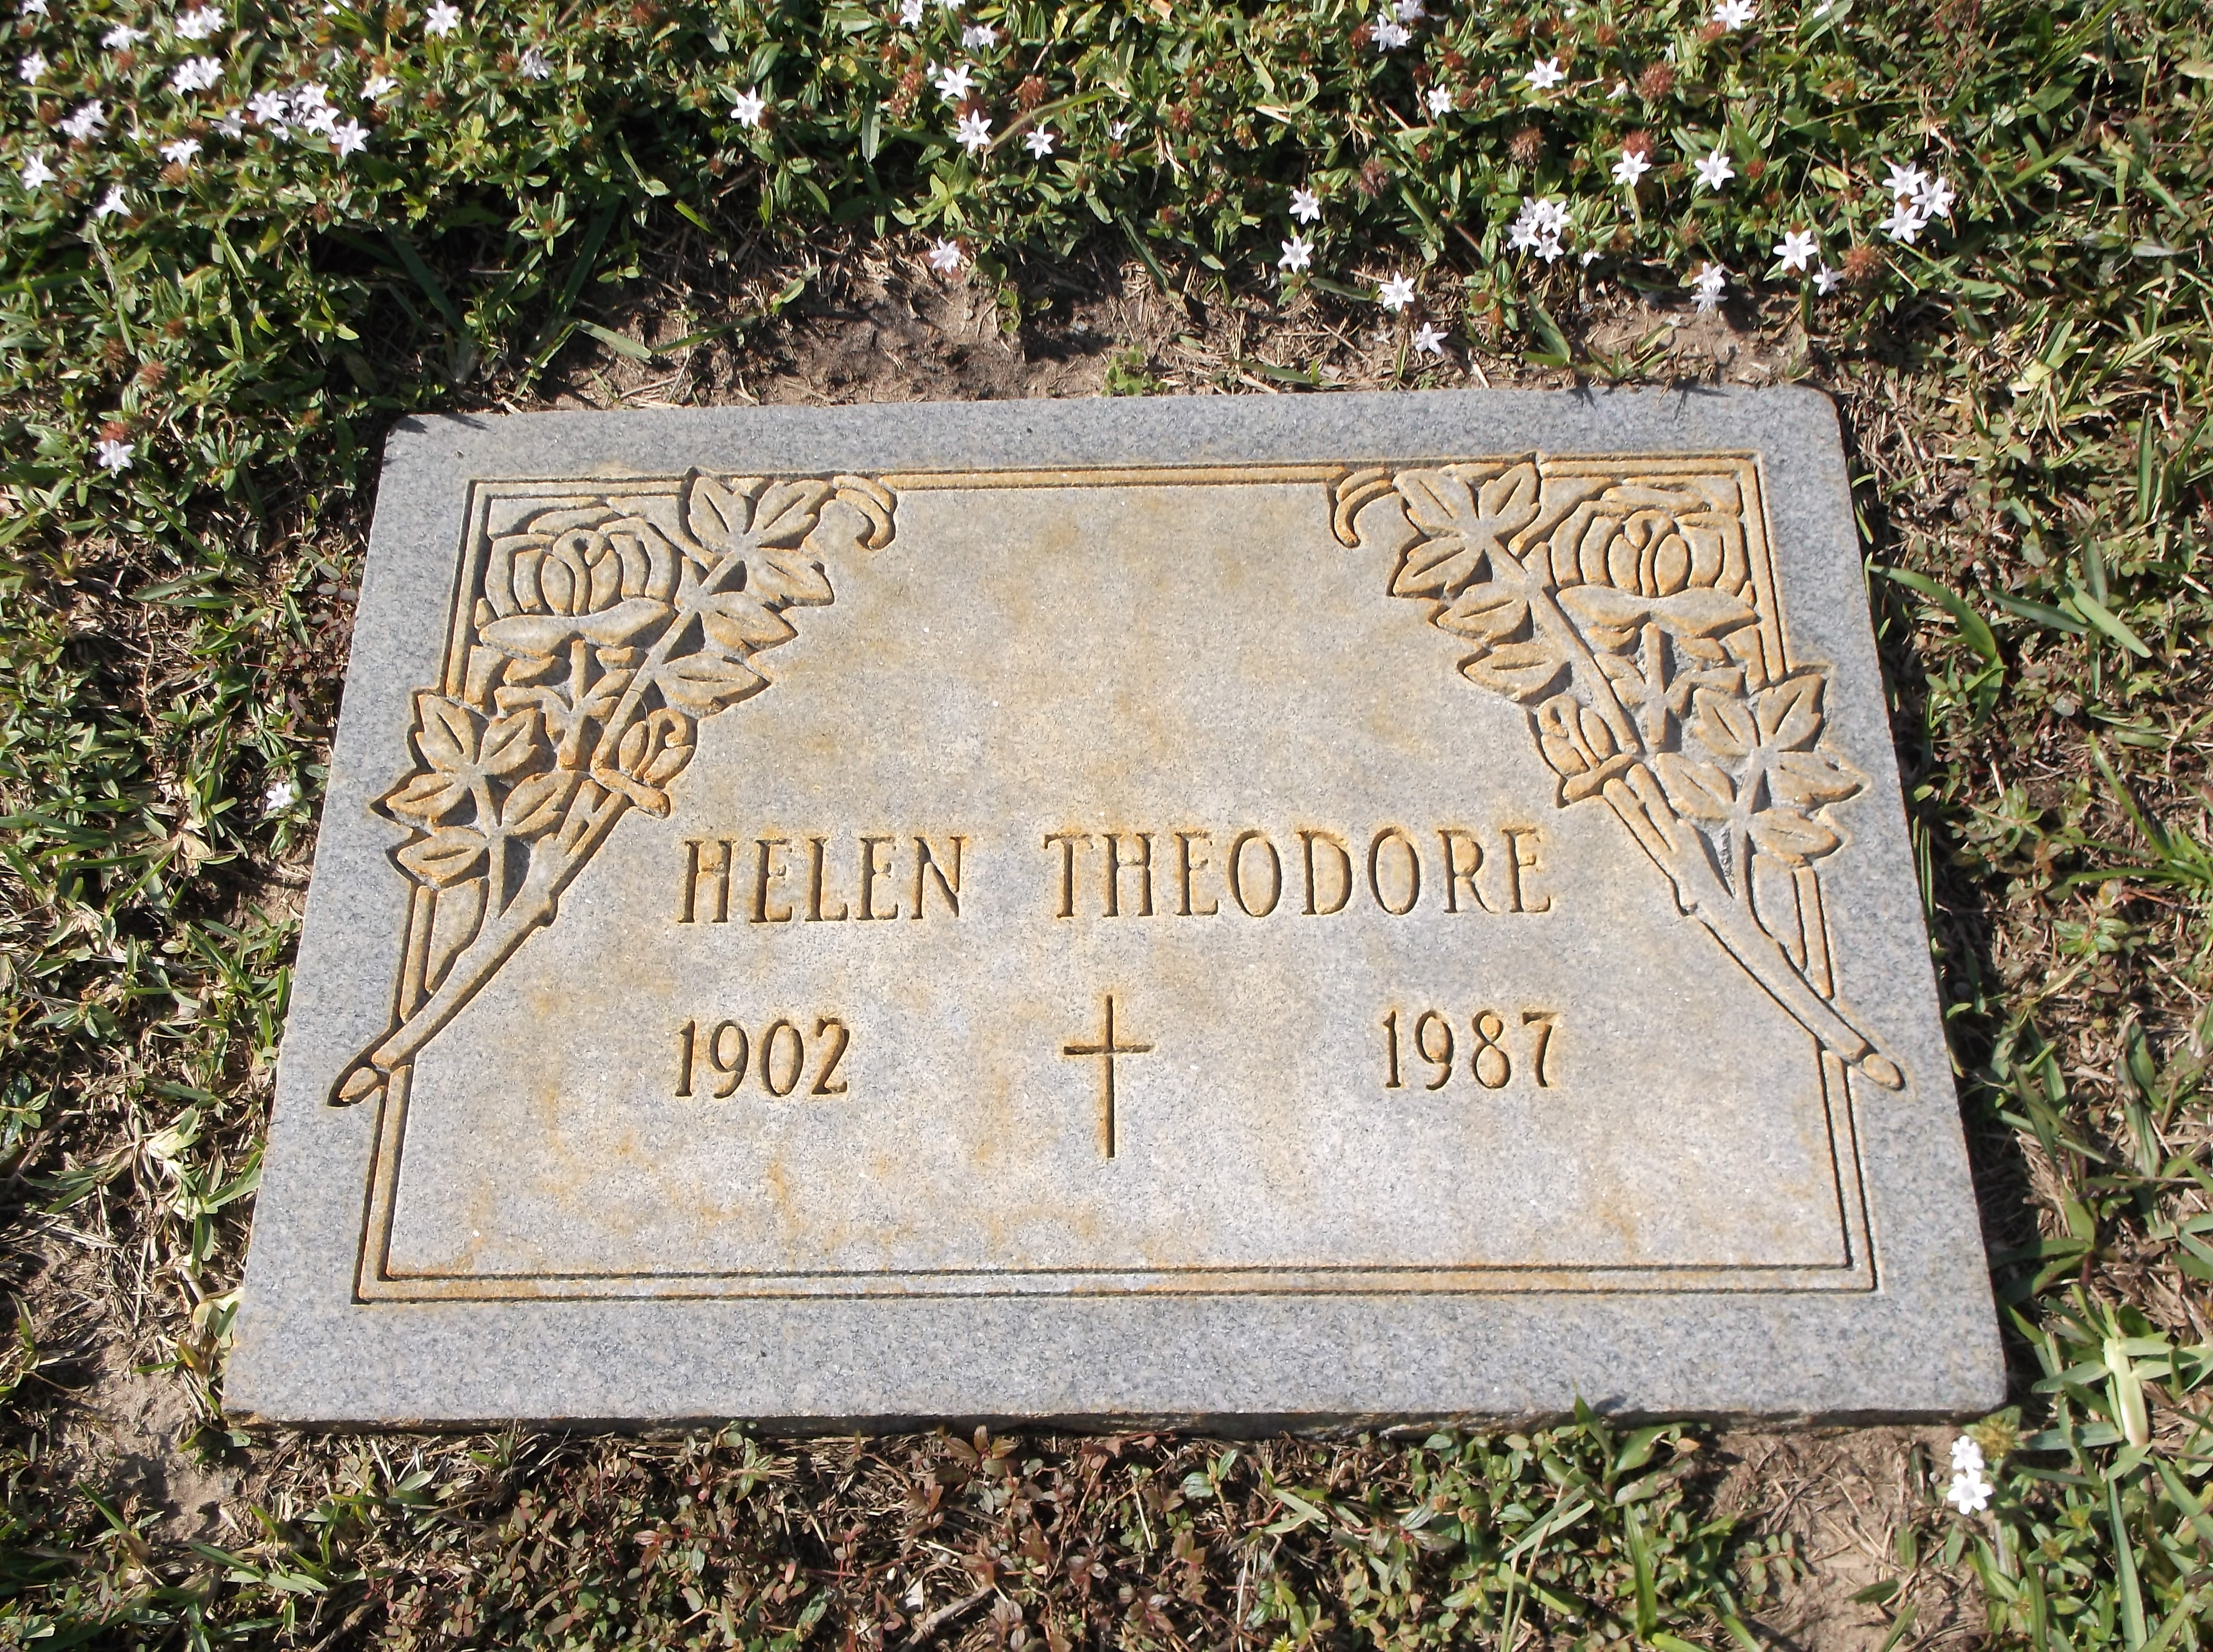 Helen Theodore